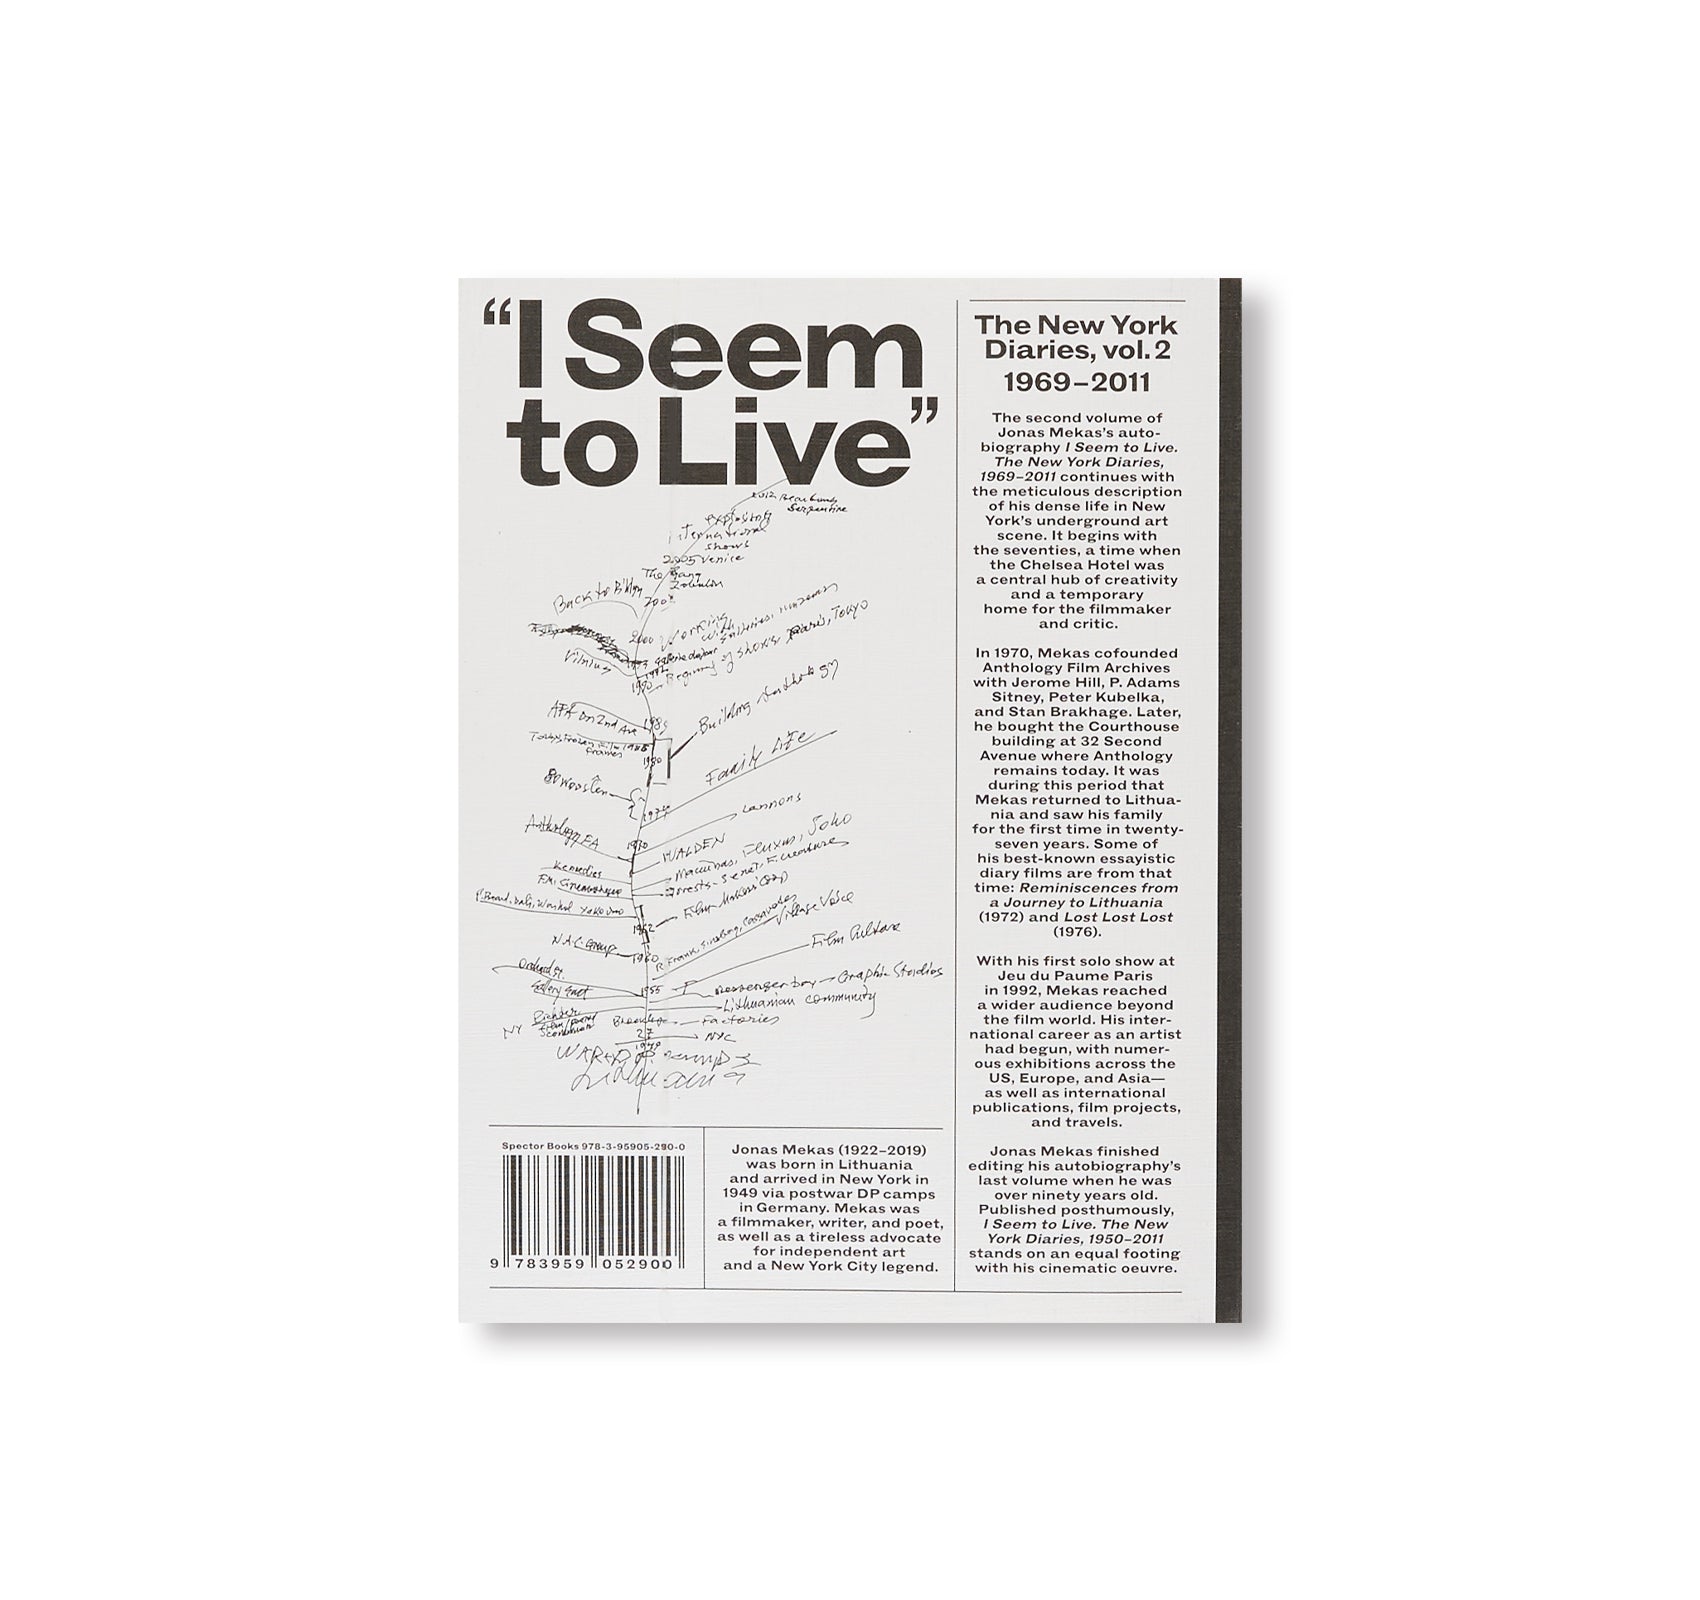 I SEEM TO LIVE - The New York Diaries. vol. 2, 1969-2011 by Jonas Mekas